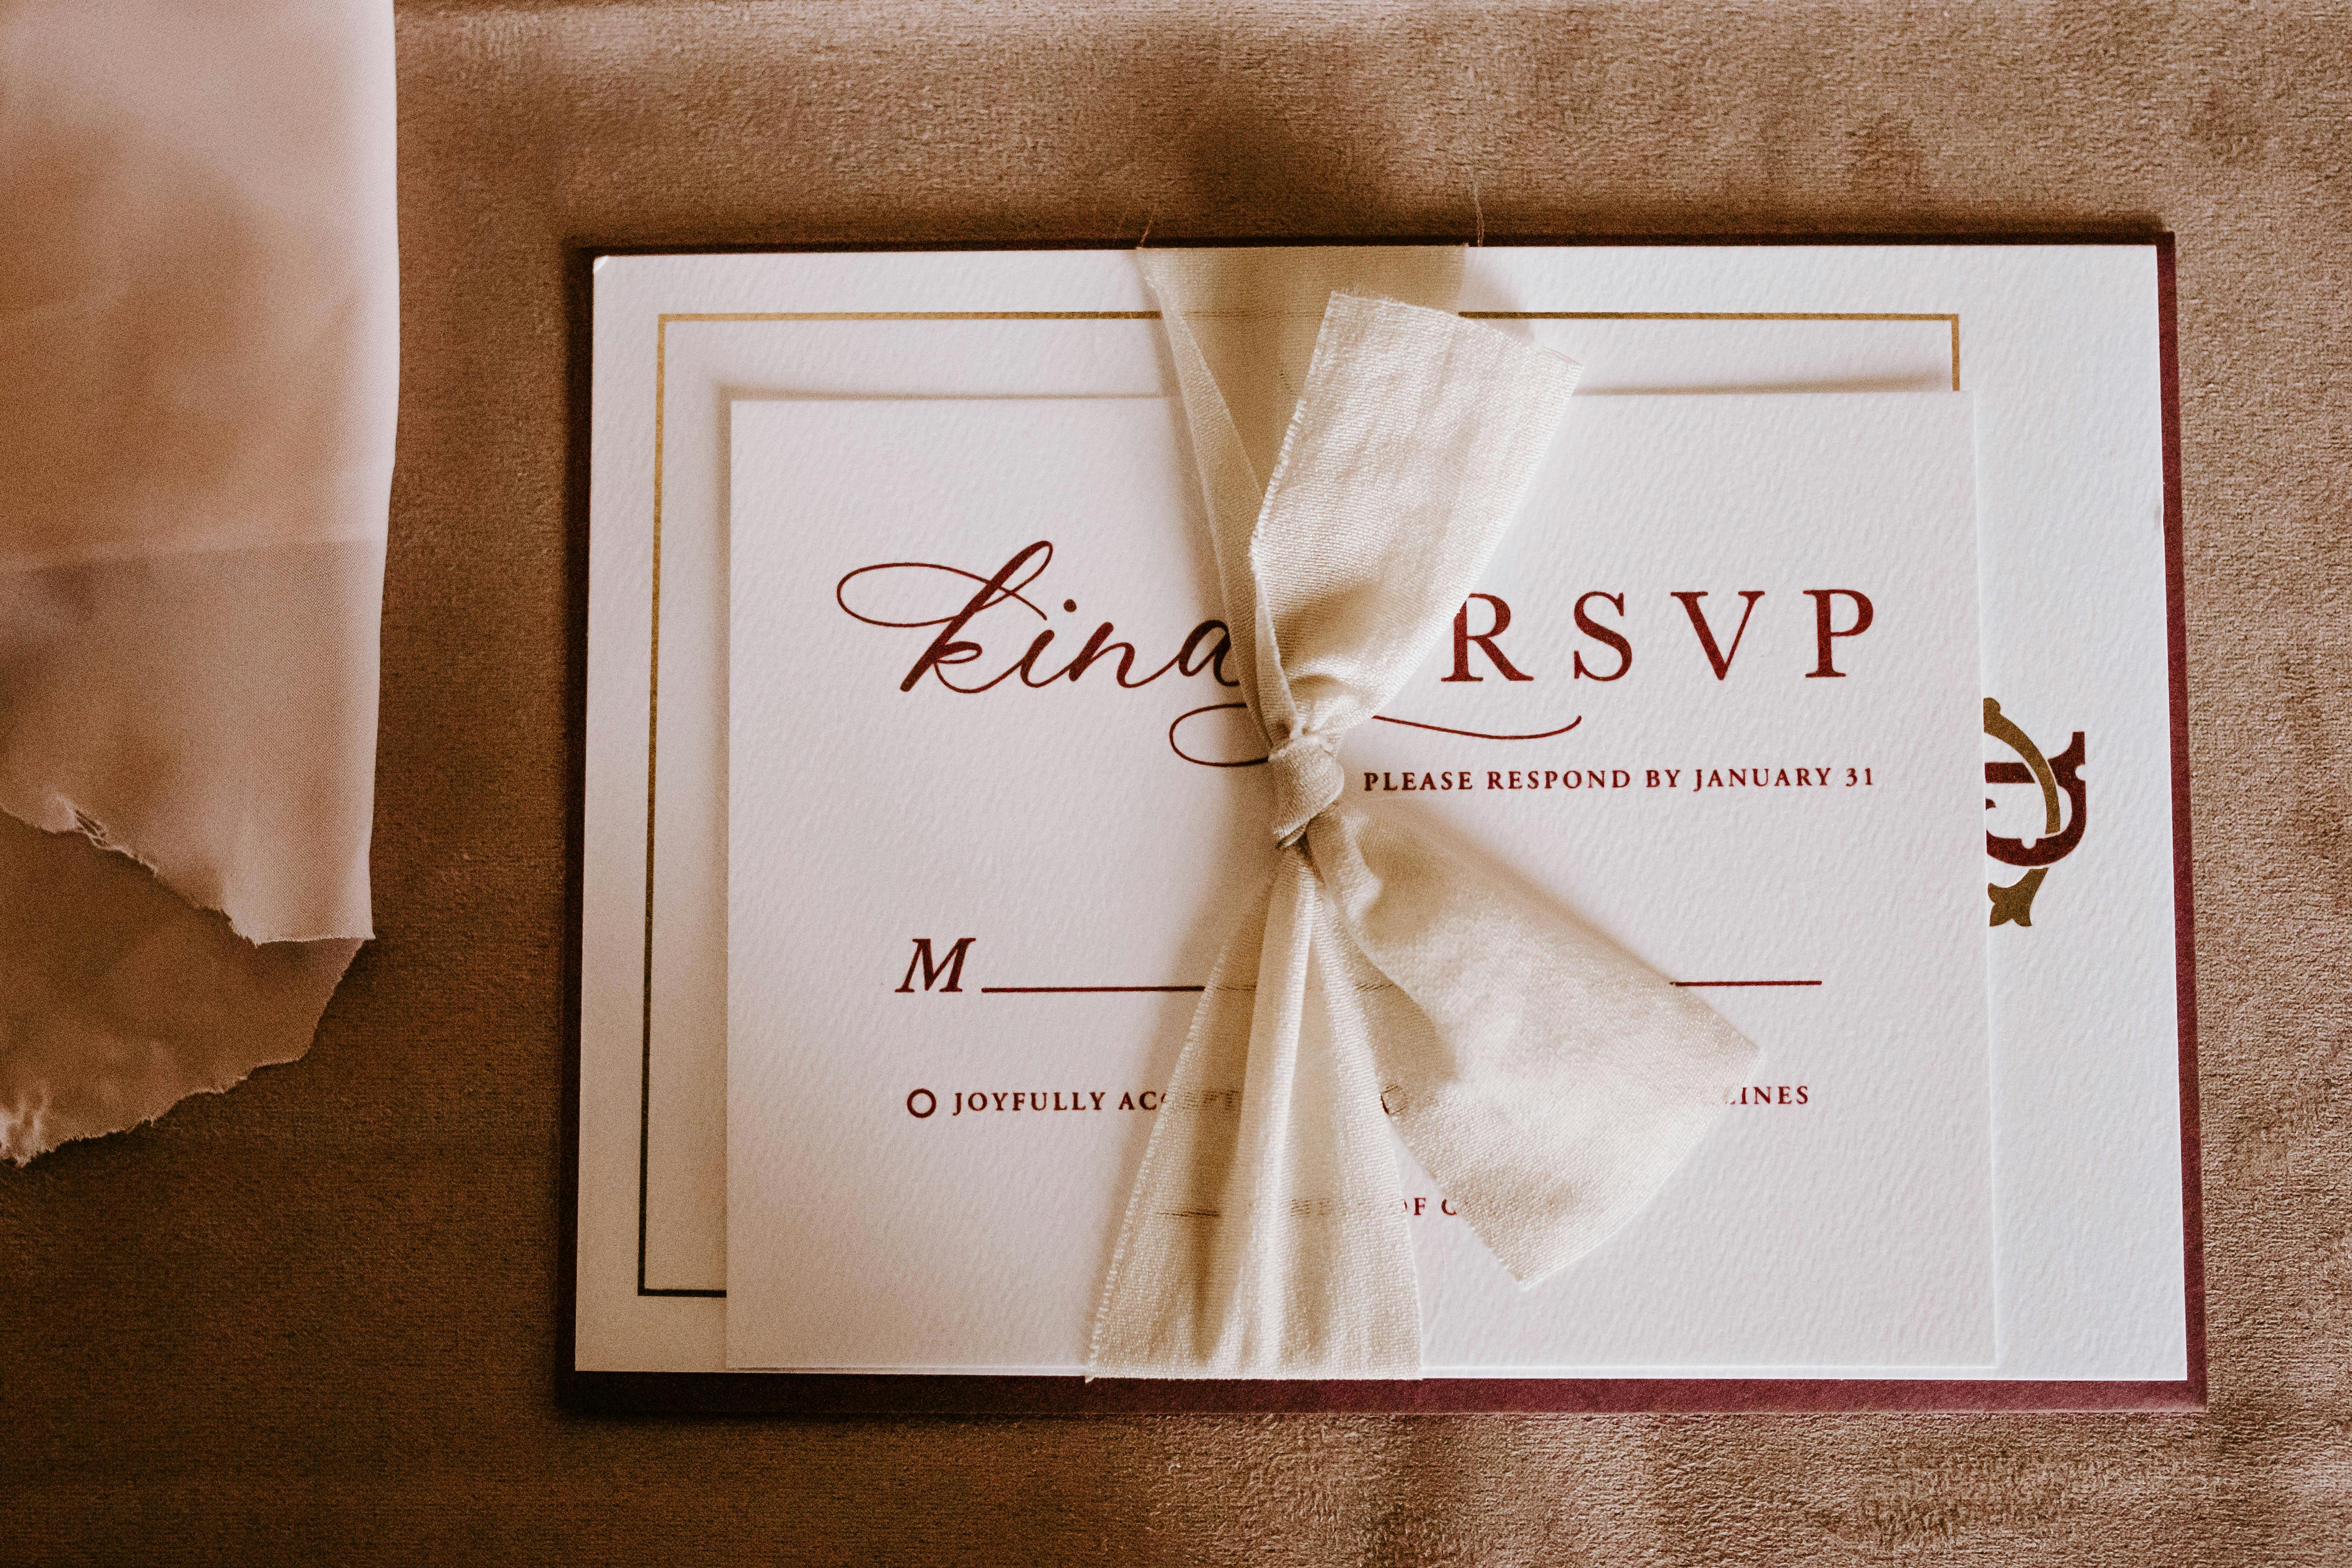 A wedding invitation card | Source: Pexels